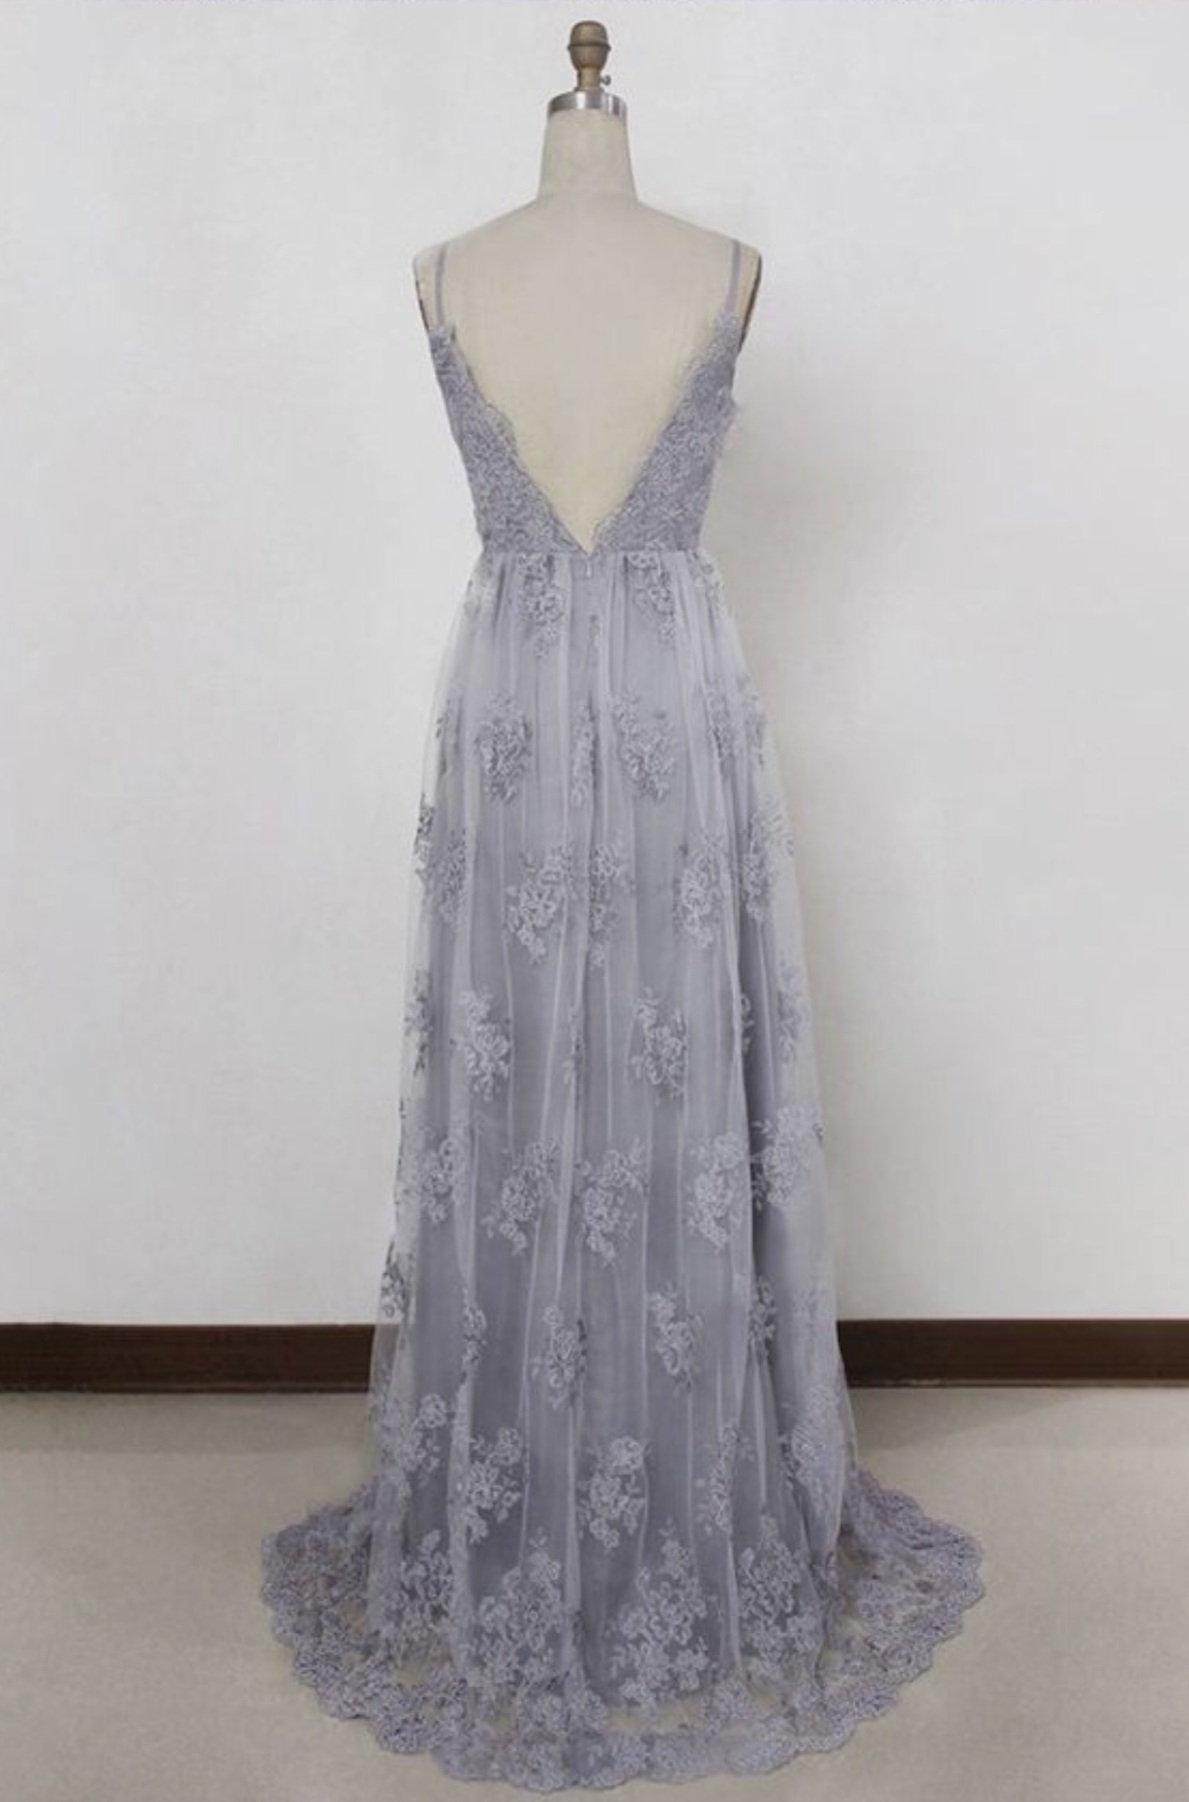 purple gray dress